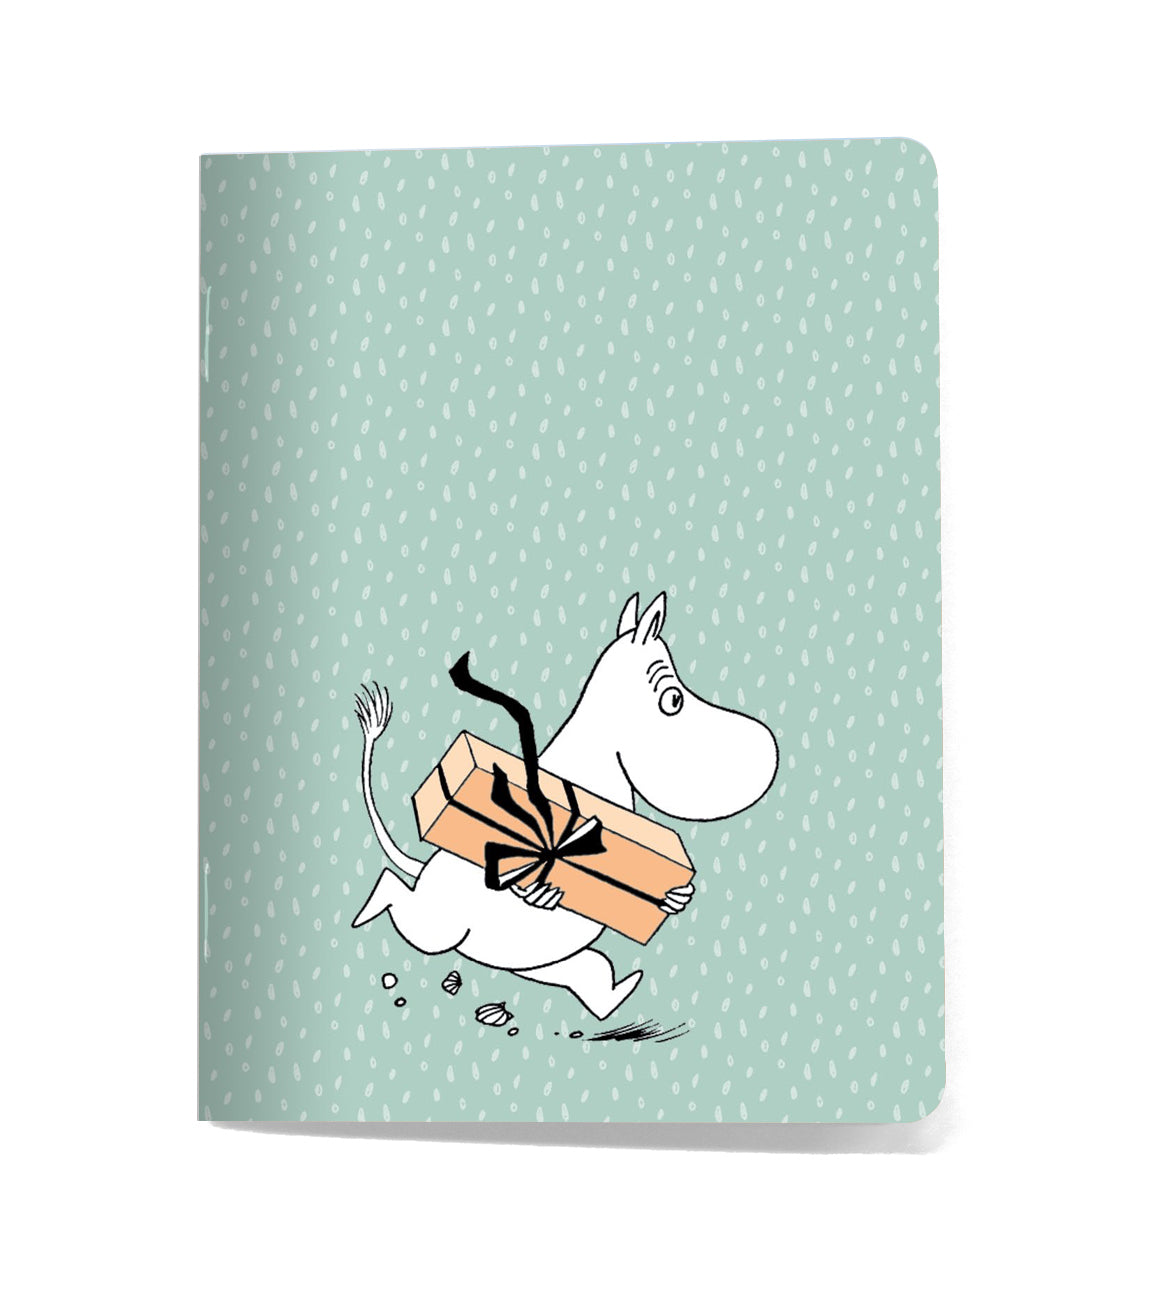 Moomin booklet - Moomin troll and gift